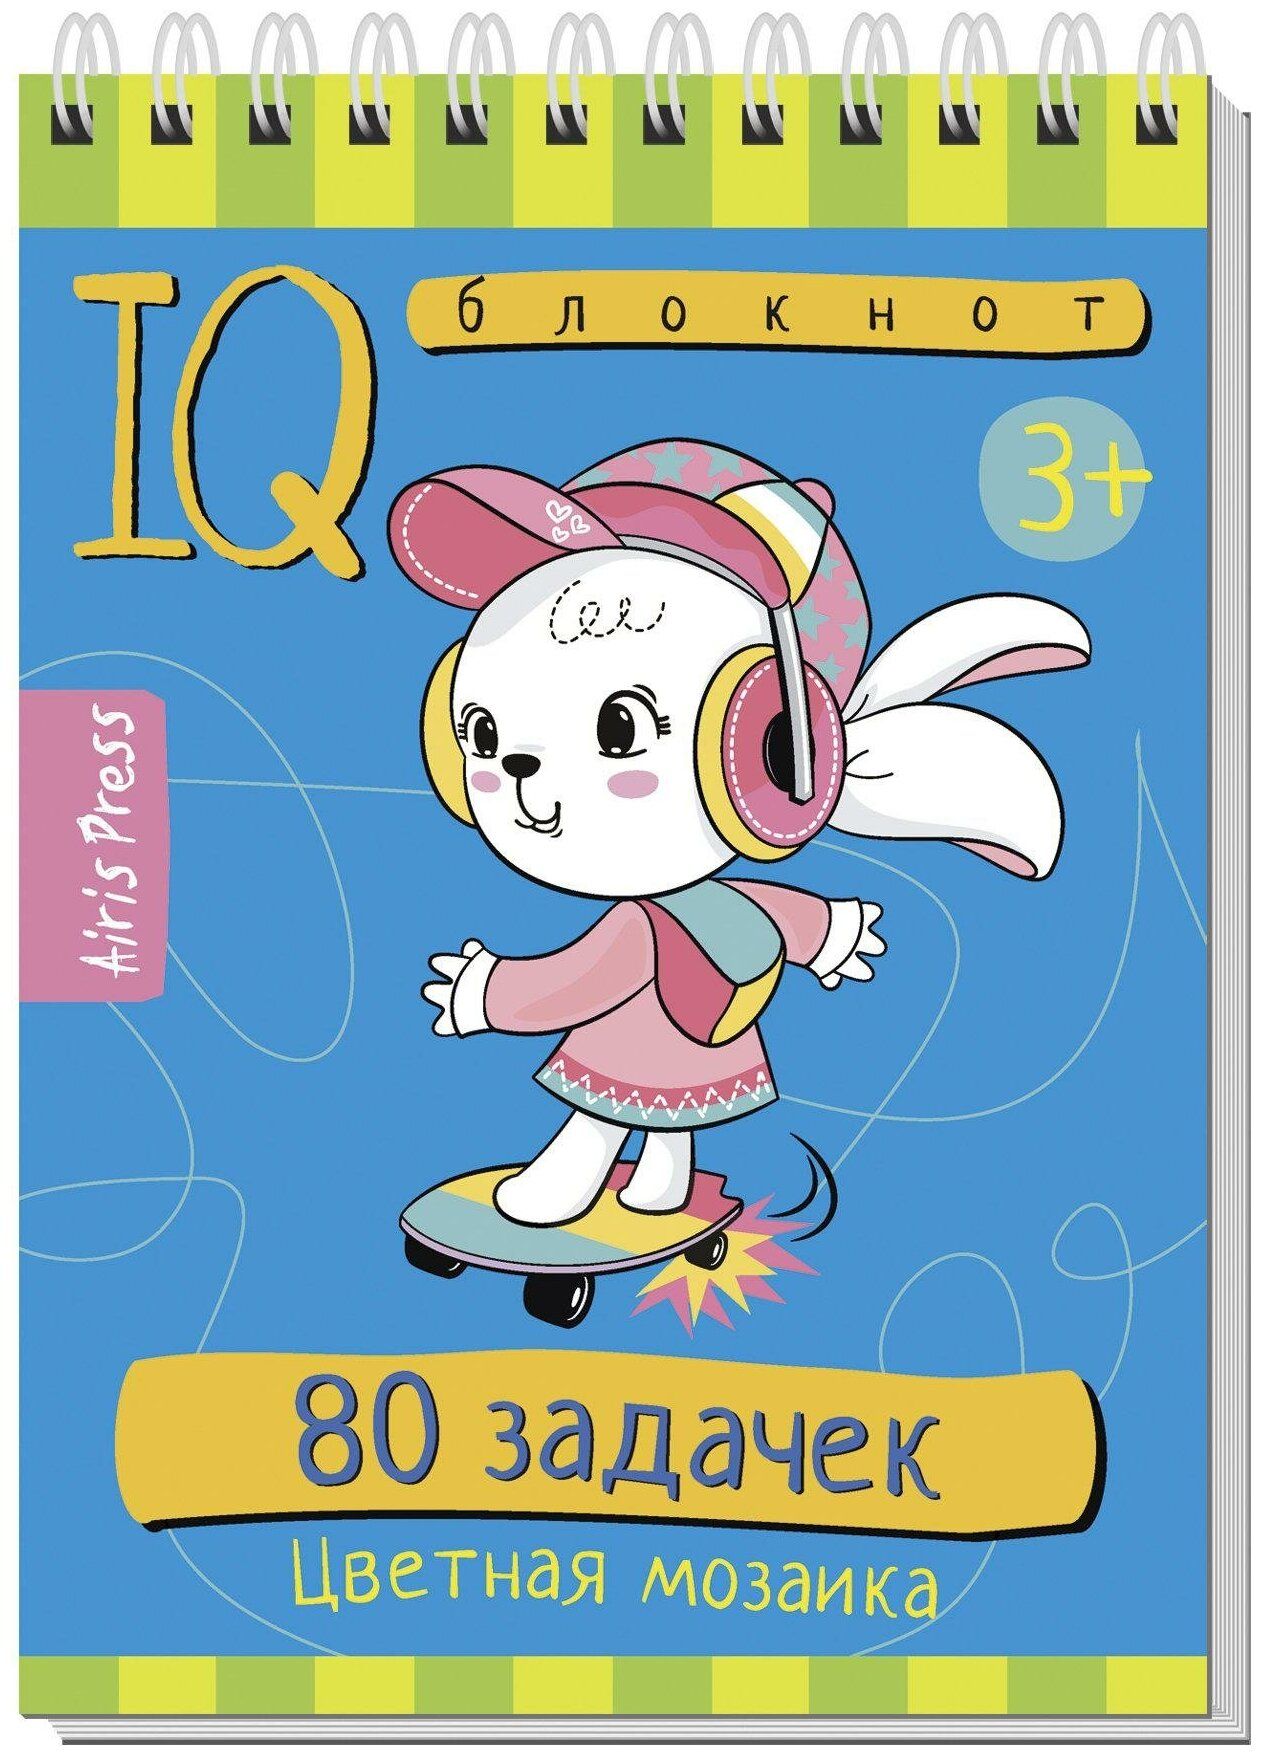 IQ блокнот Айрис-пресс 80 задачек. Цветная мозаика 3+ арт.28401